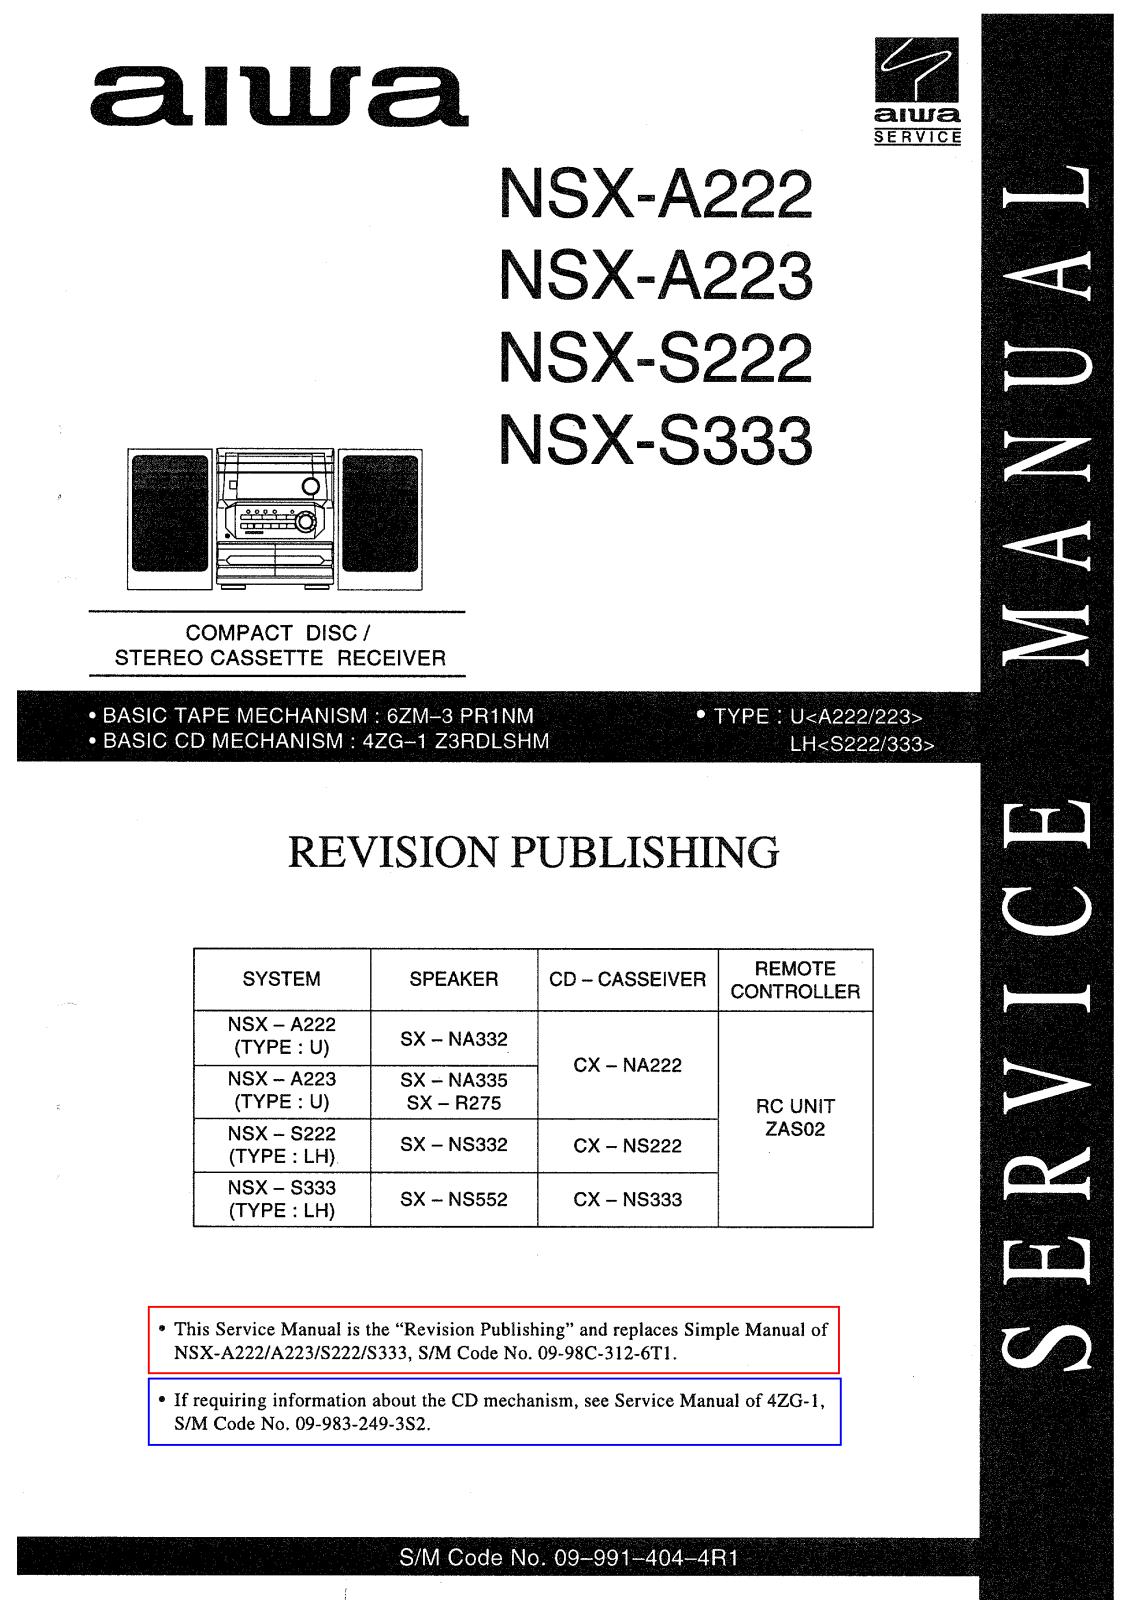 Aiwa NSX-A223, NSX-S222, NSX-S333 Service Manual